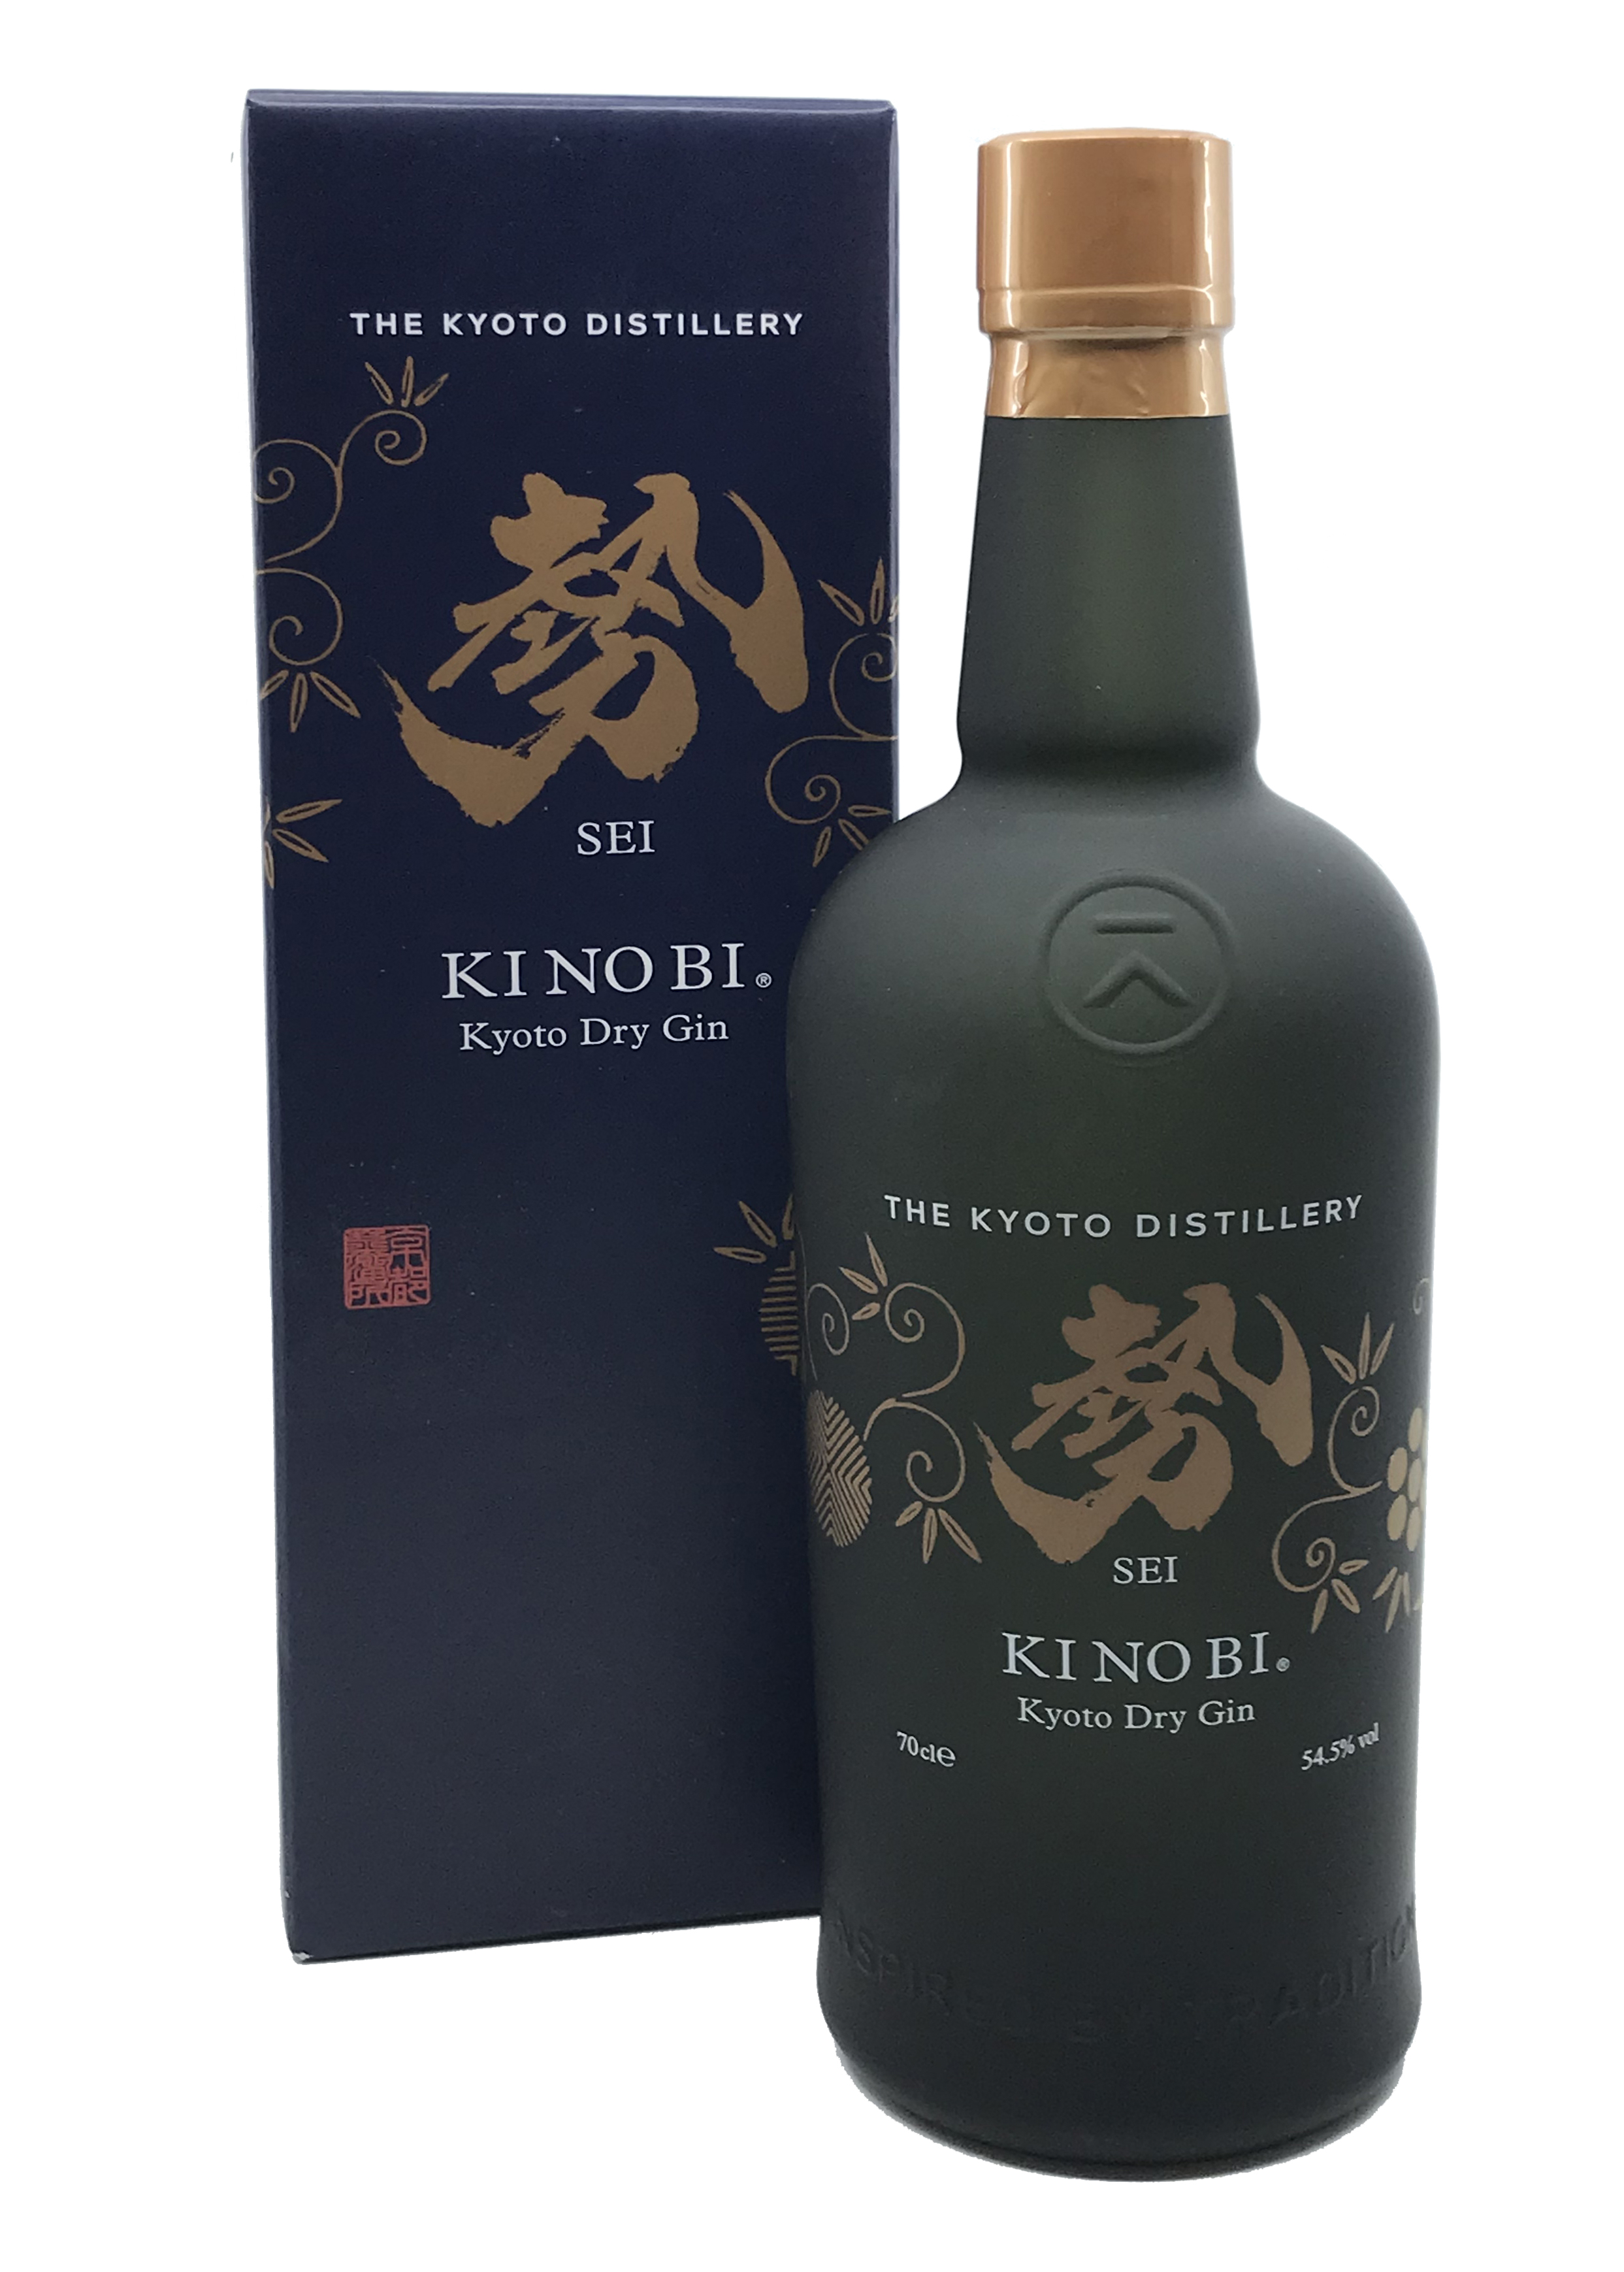 KI NO BI SEI - Kyoto Dry Gin - 0,7l - 54,5% vol. Alk. - Highproof - Kinobi